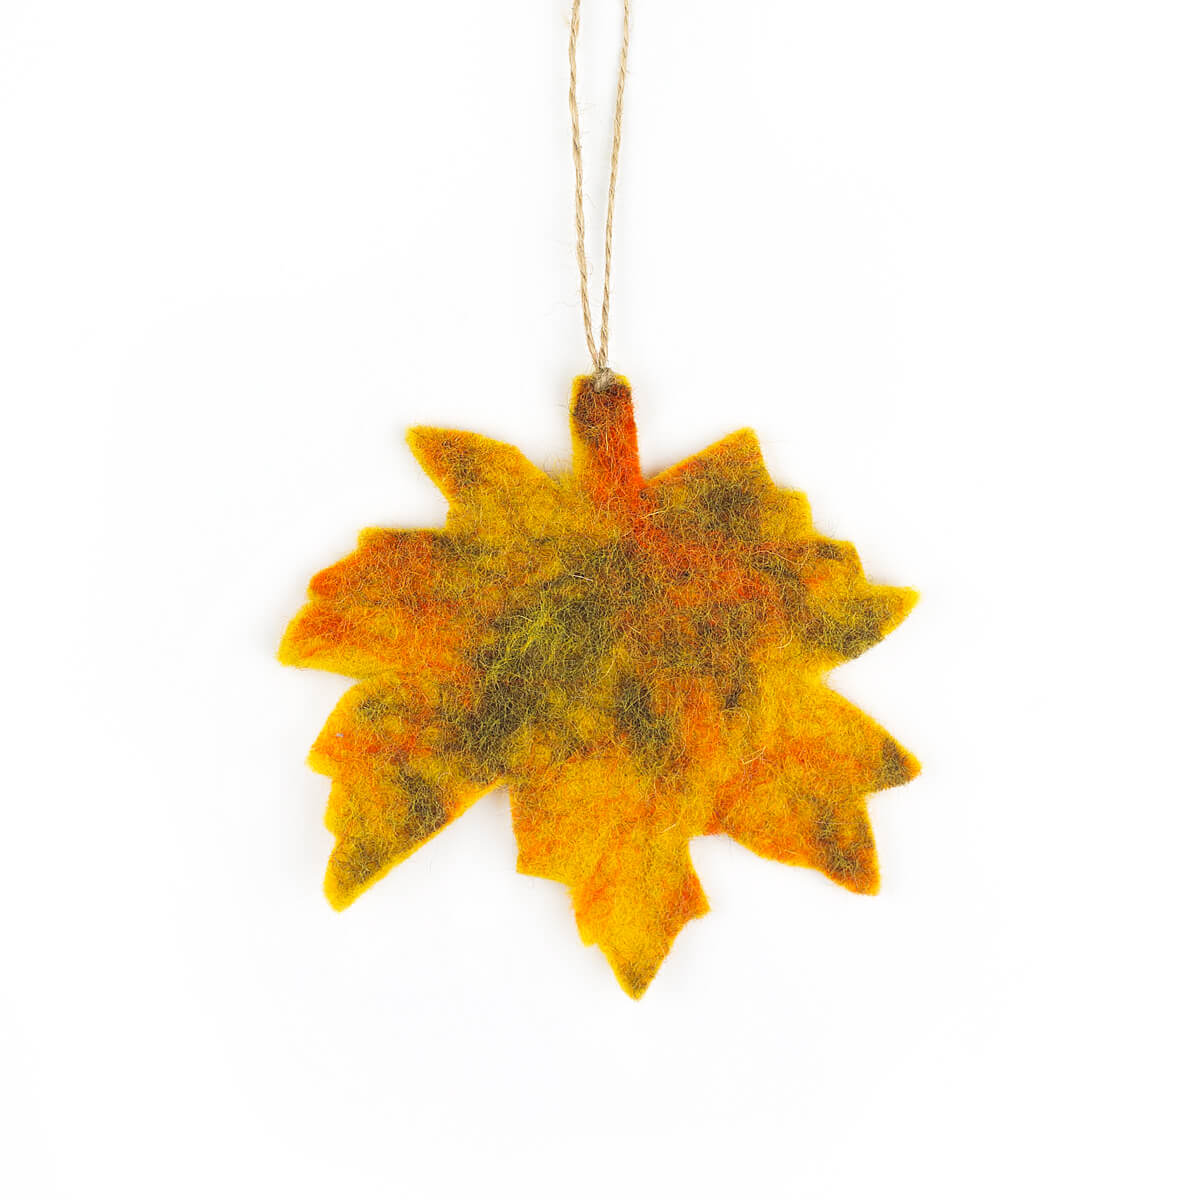 Felt Autumn Leaves - Outlet - Save 20%